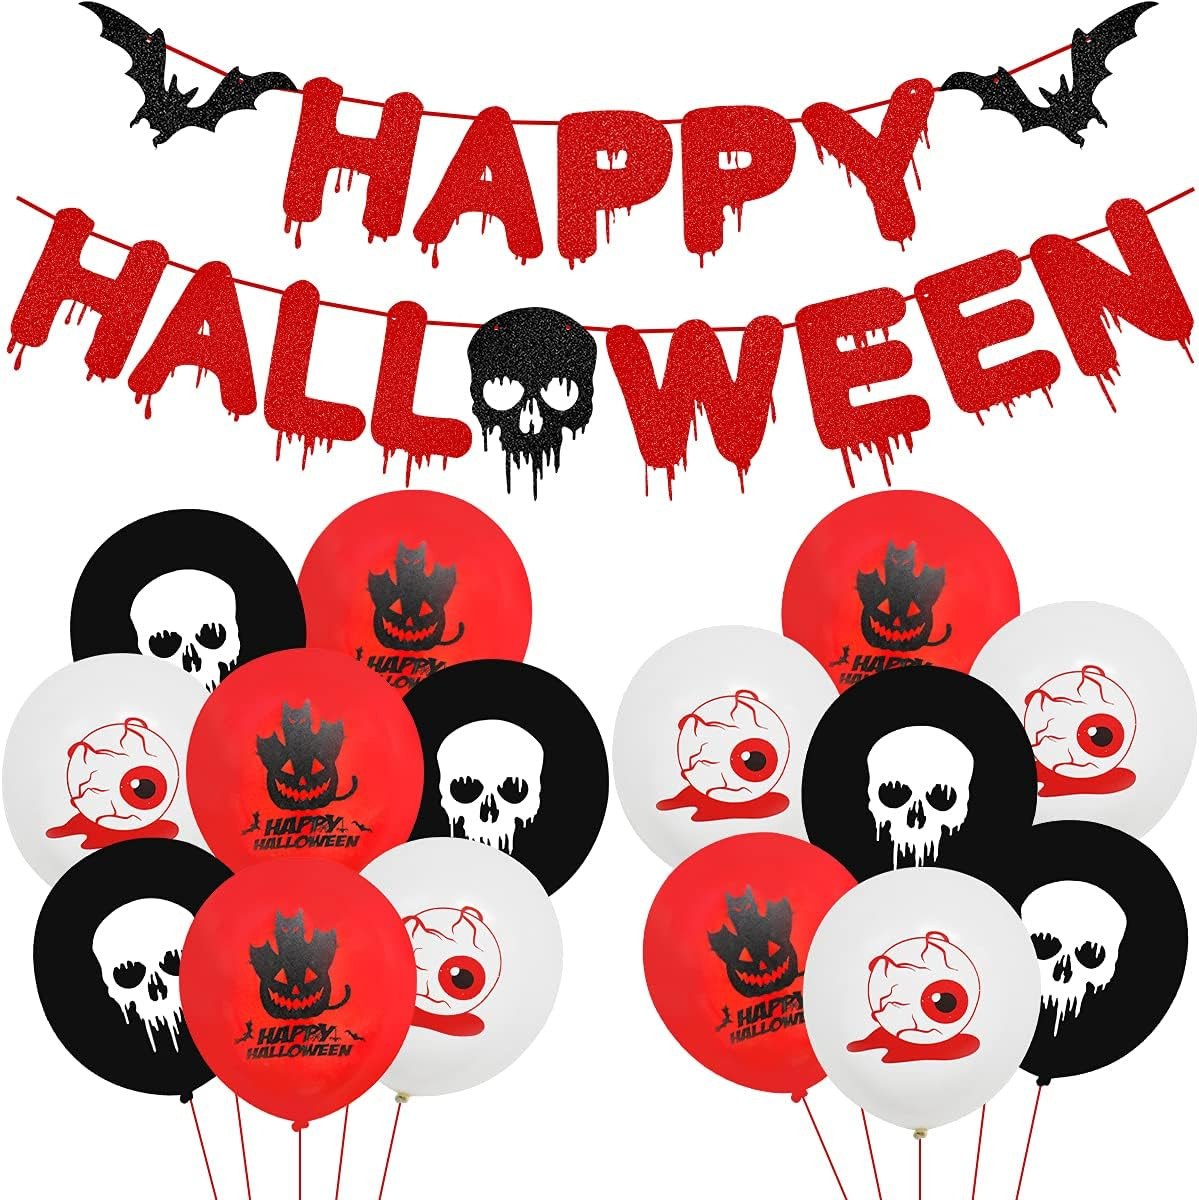 Poze Set de banner si 15 baloane pentru Halloween Tomicy, latex/hartie, rosu/negru/alb